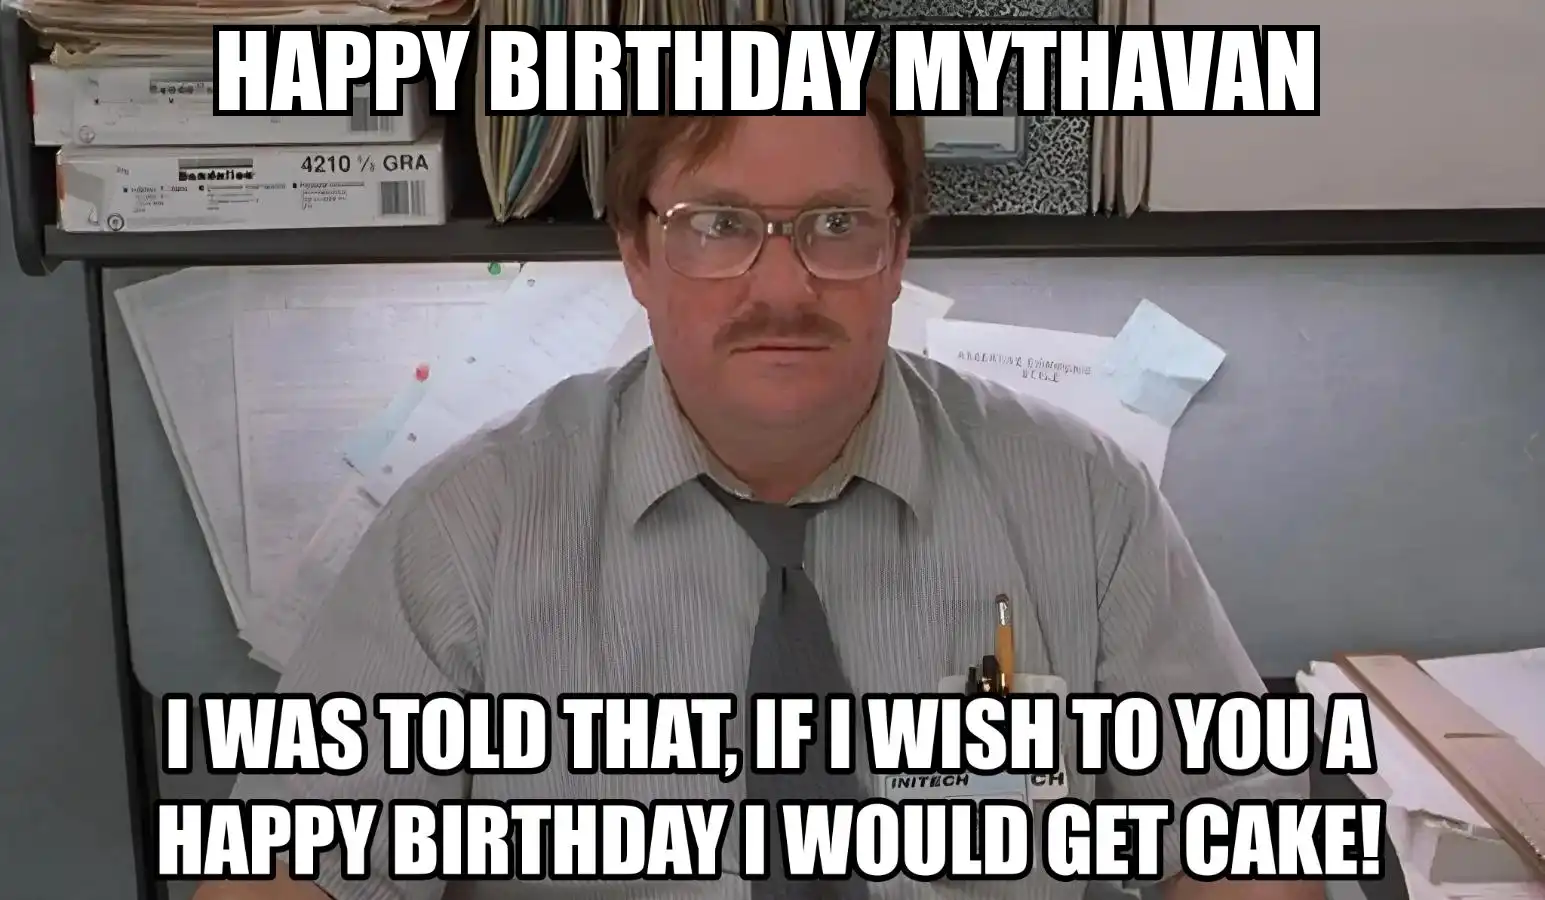 Happy Birthday Mythavan I Would Get A Cake Meme